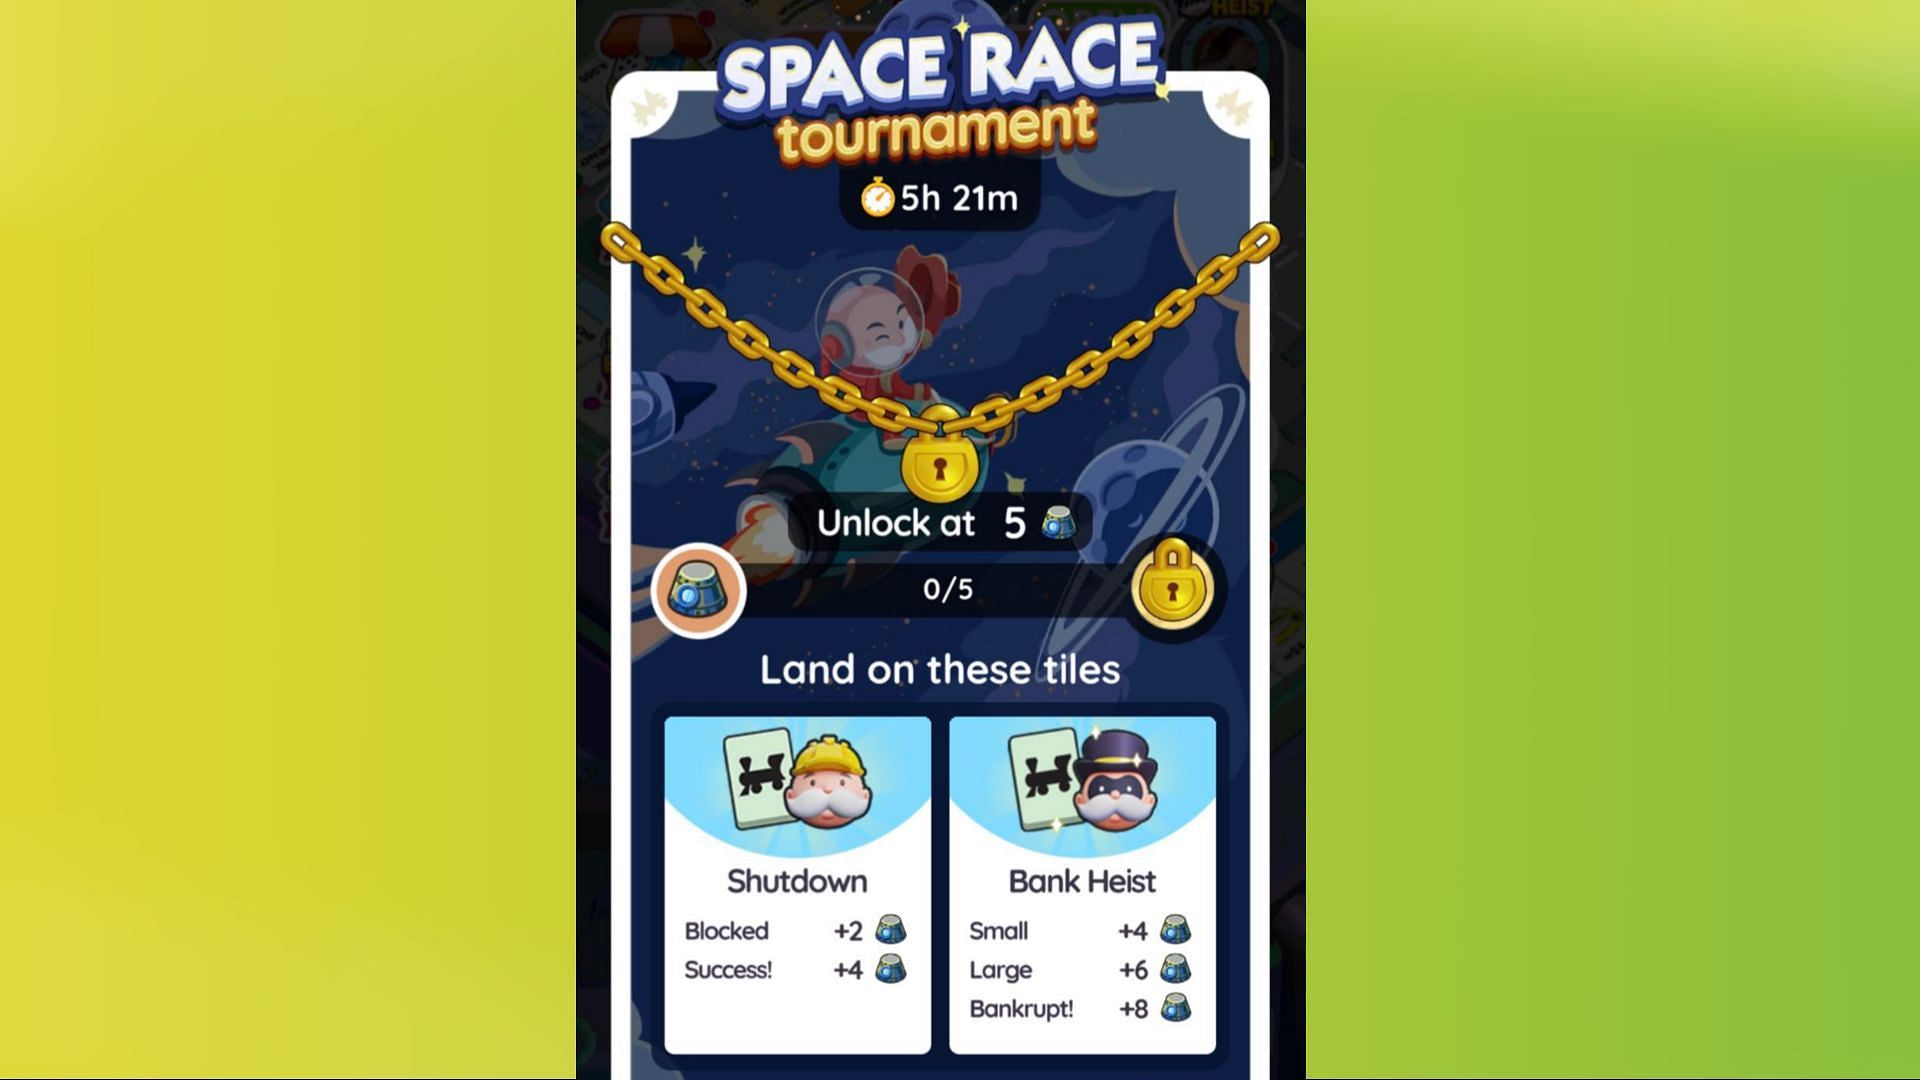 Space Race tournament scoring system (Image via Scopely)